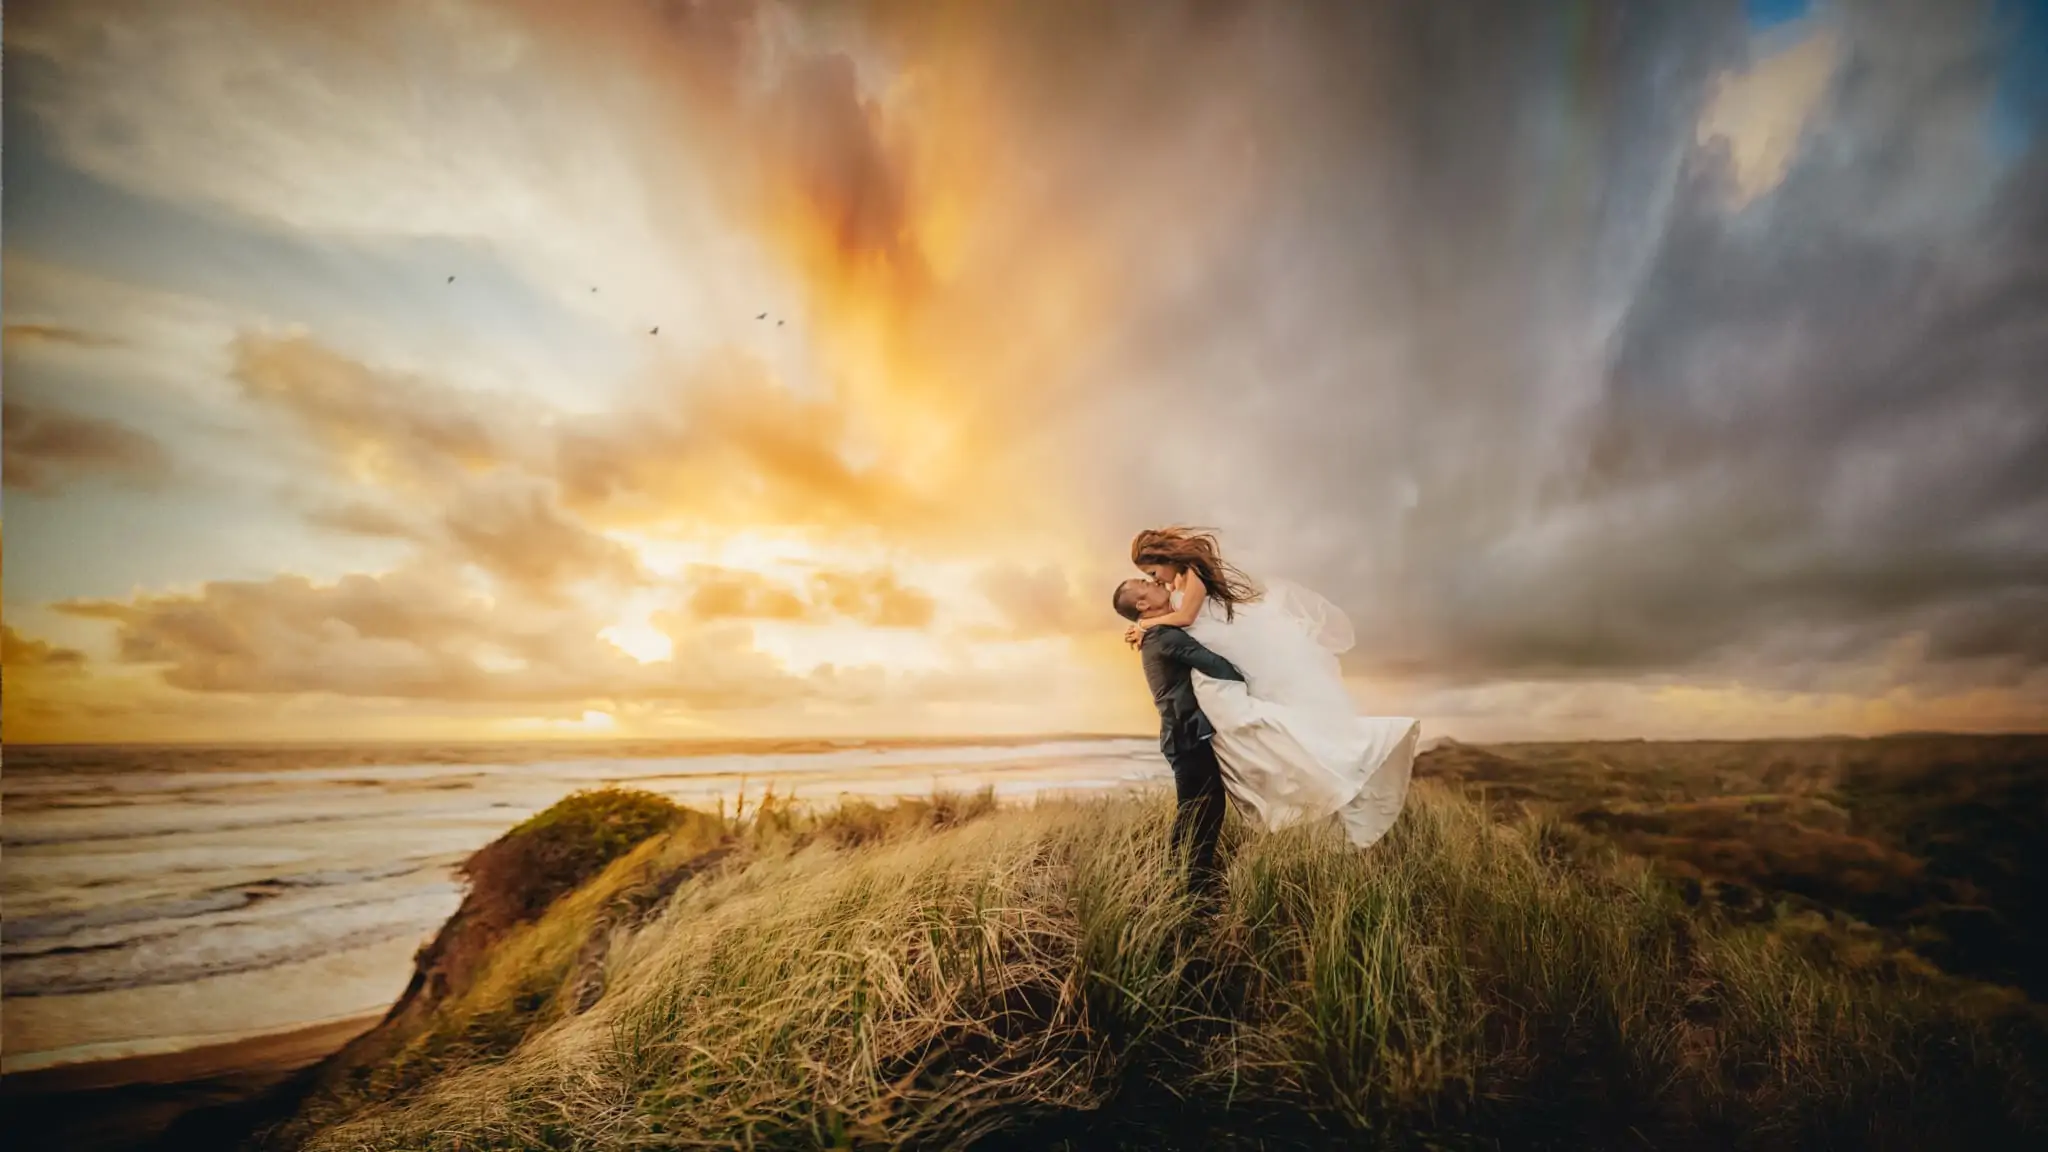 May & Danny's Muriwai Auckland NZ Pre-Wedding Shoot - New Zealand Wedding Photographer